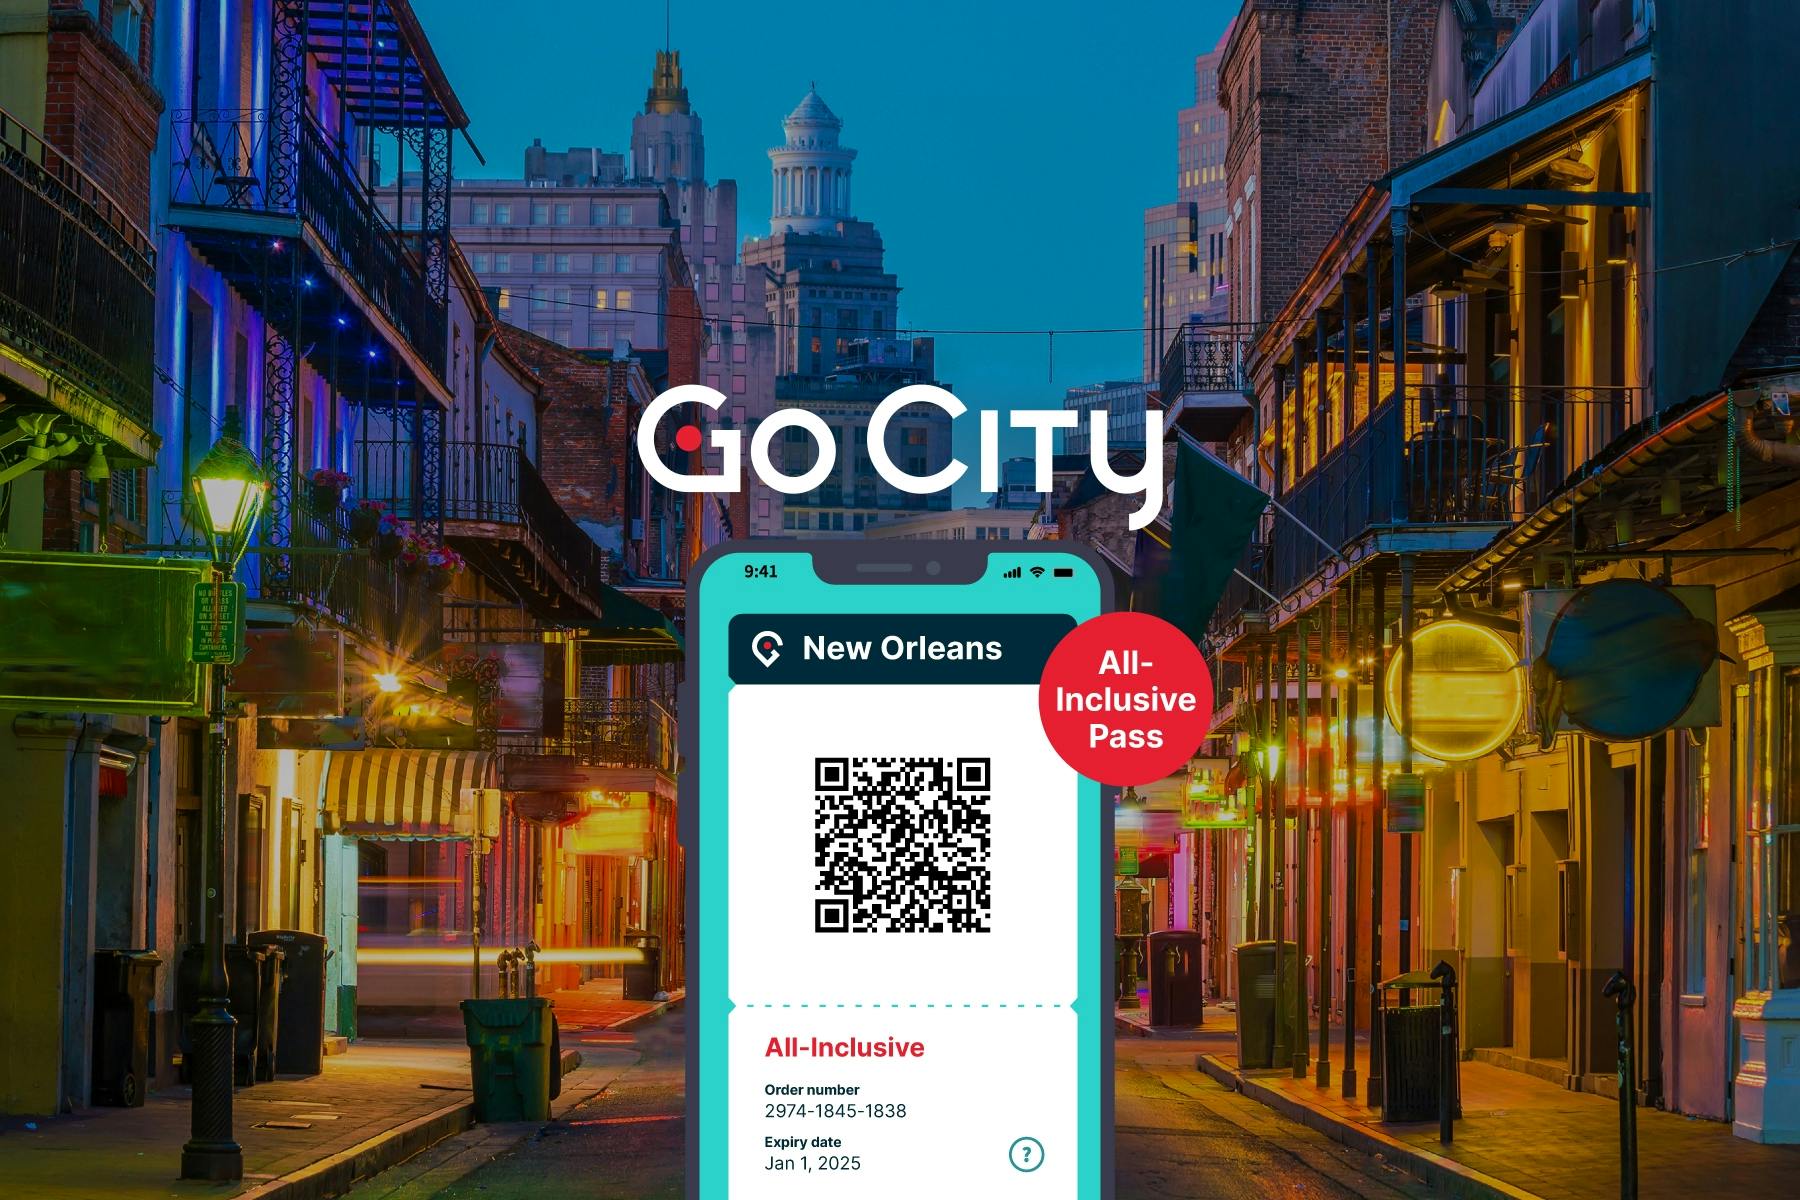 Ga stad | All-inclusive pas voor New Orleans